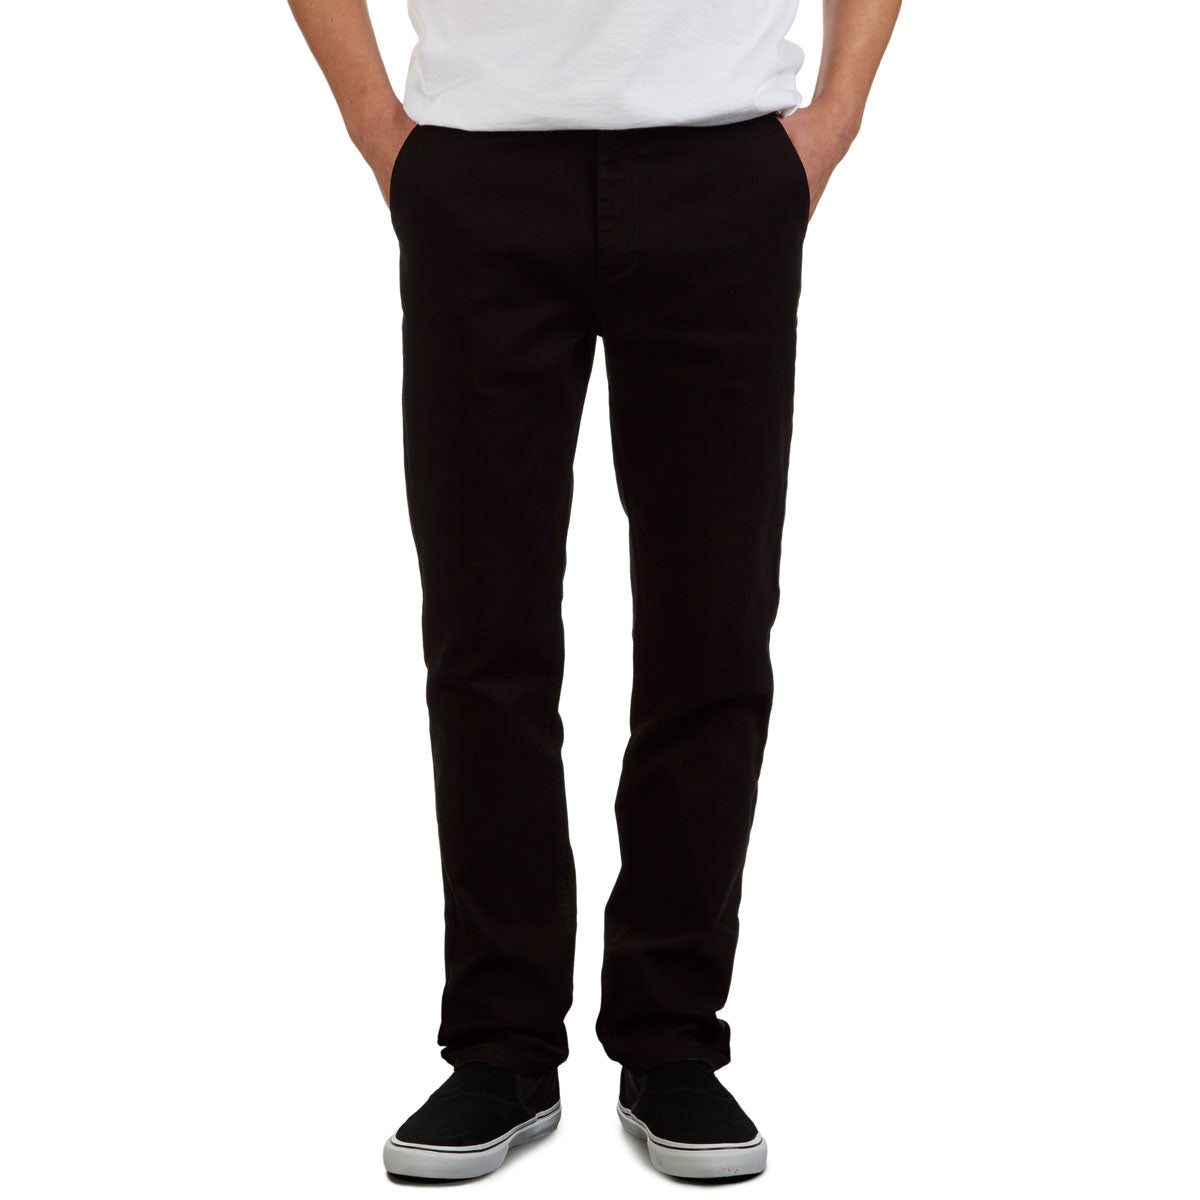 CCS Standard Plus Slim Chino Pants - Black image 1